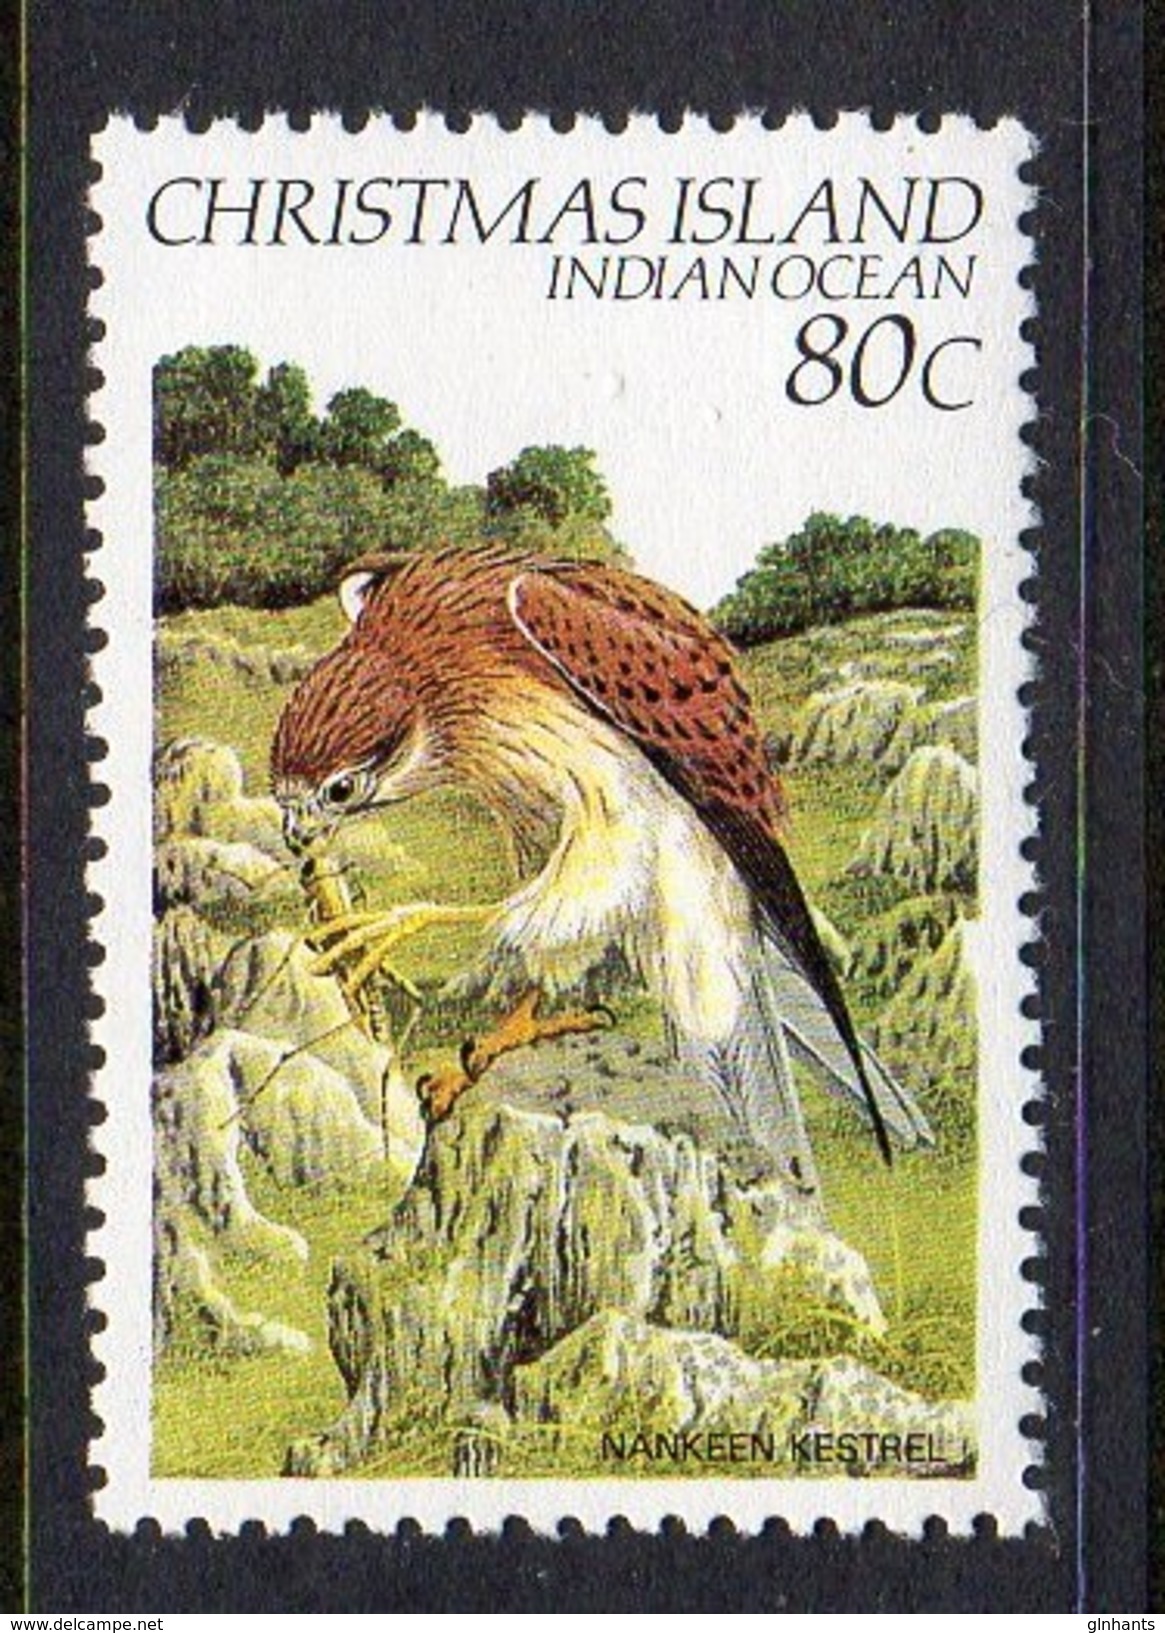 CHRISTMAS ISLAND - 1982 80c DEFINITIVE BIRD STAMP FINE MNH ** SG 164 - Christmaseiland